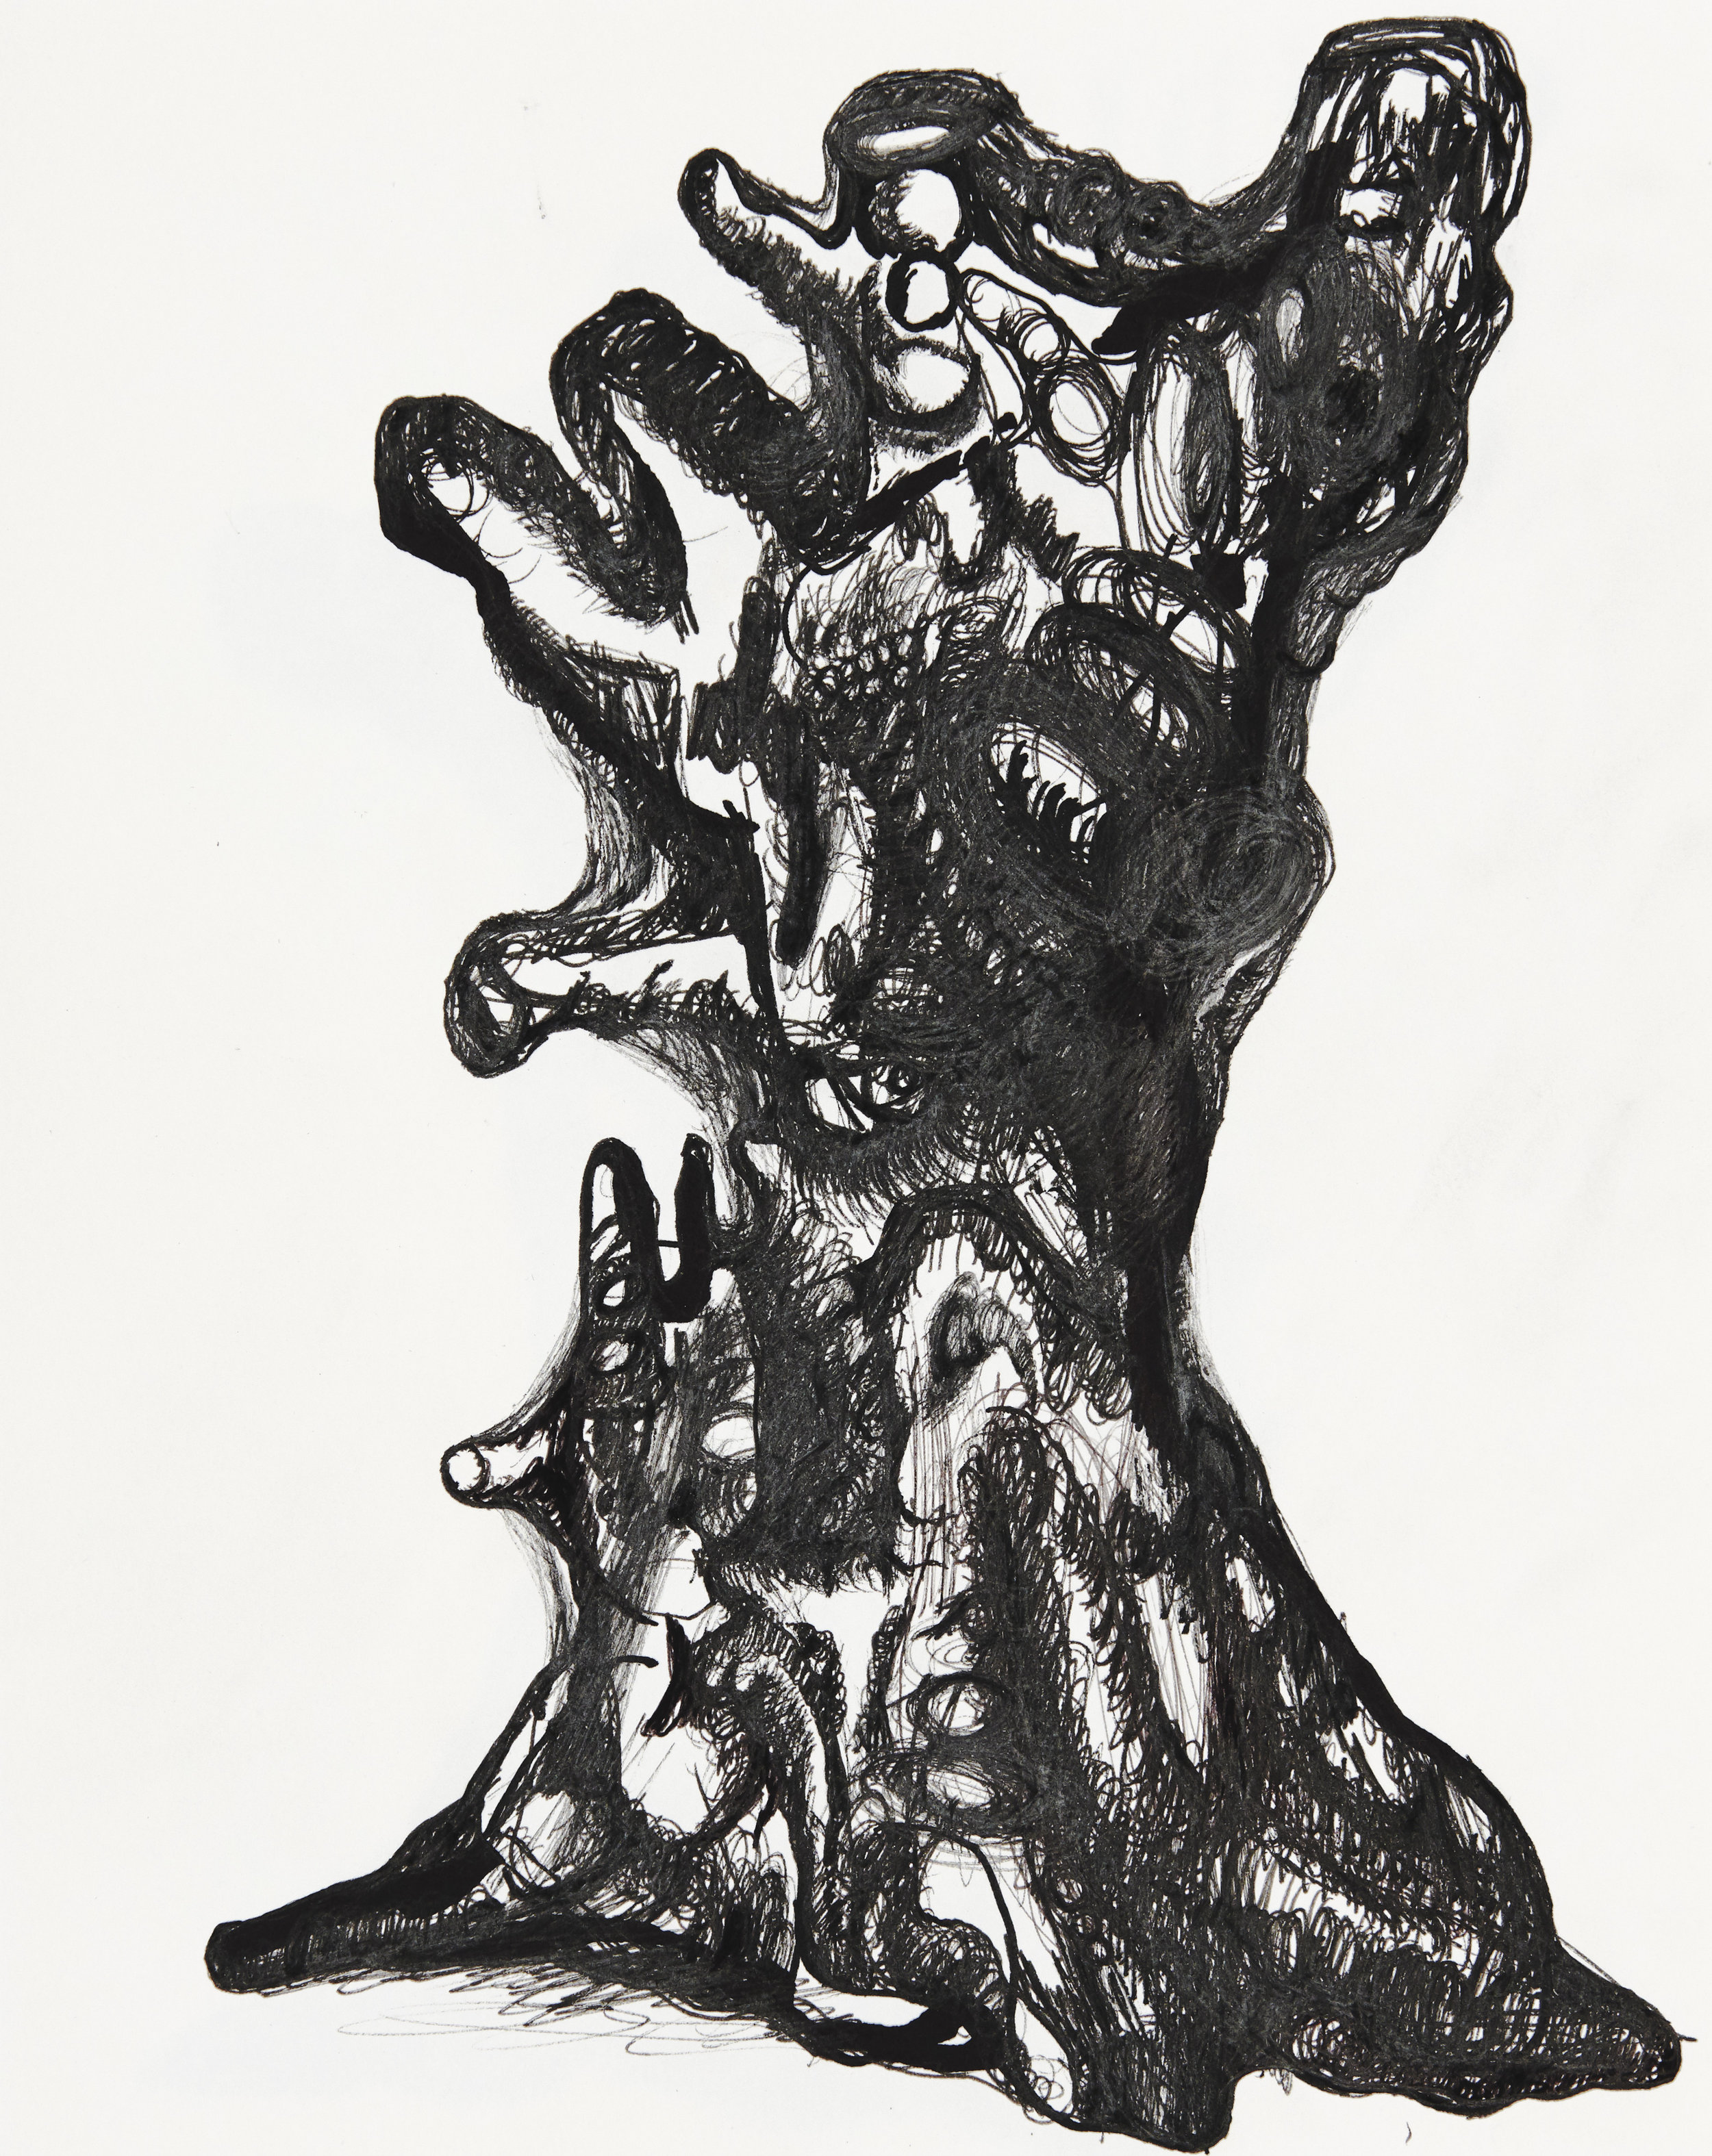  Magma tree, 2018 24 x 30 cm, Ink pen on paper 